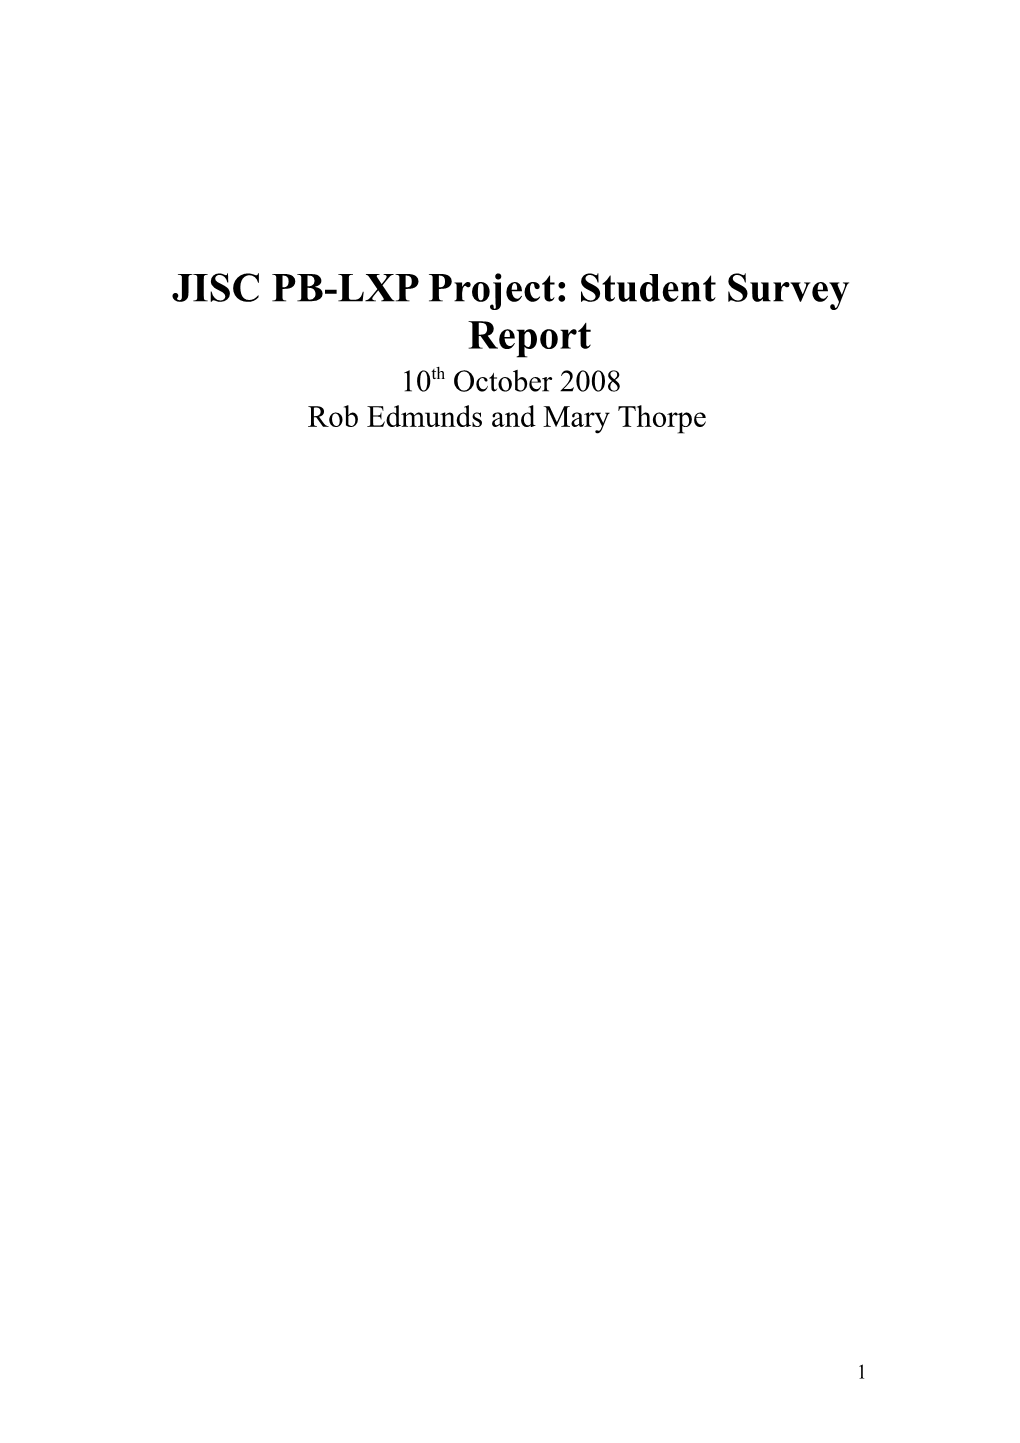 JISC PB-LXP Project: Student Survey Report